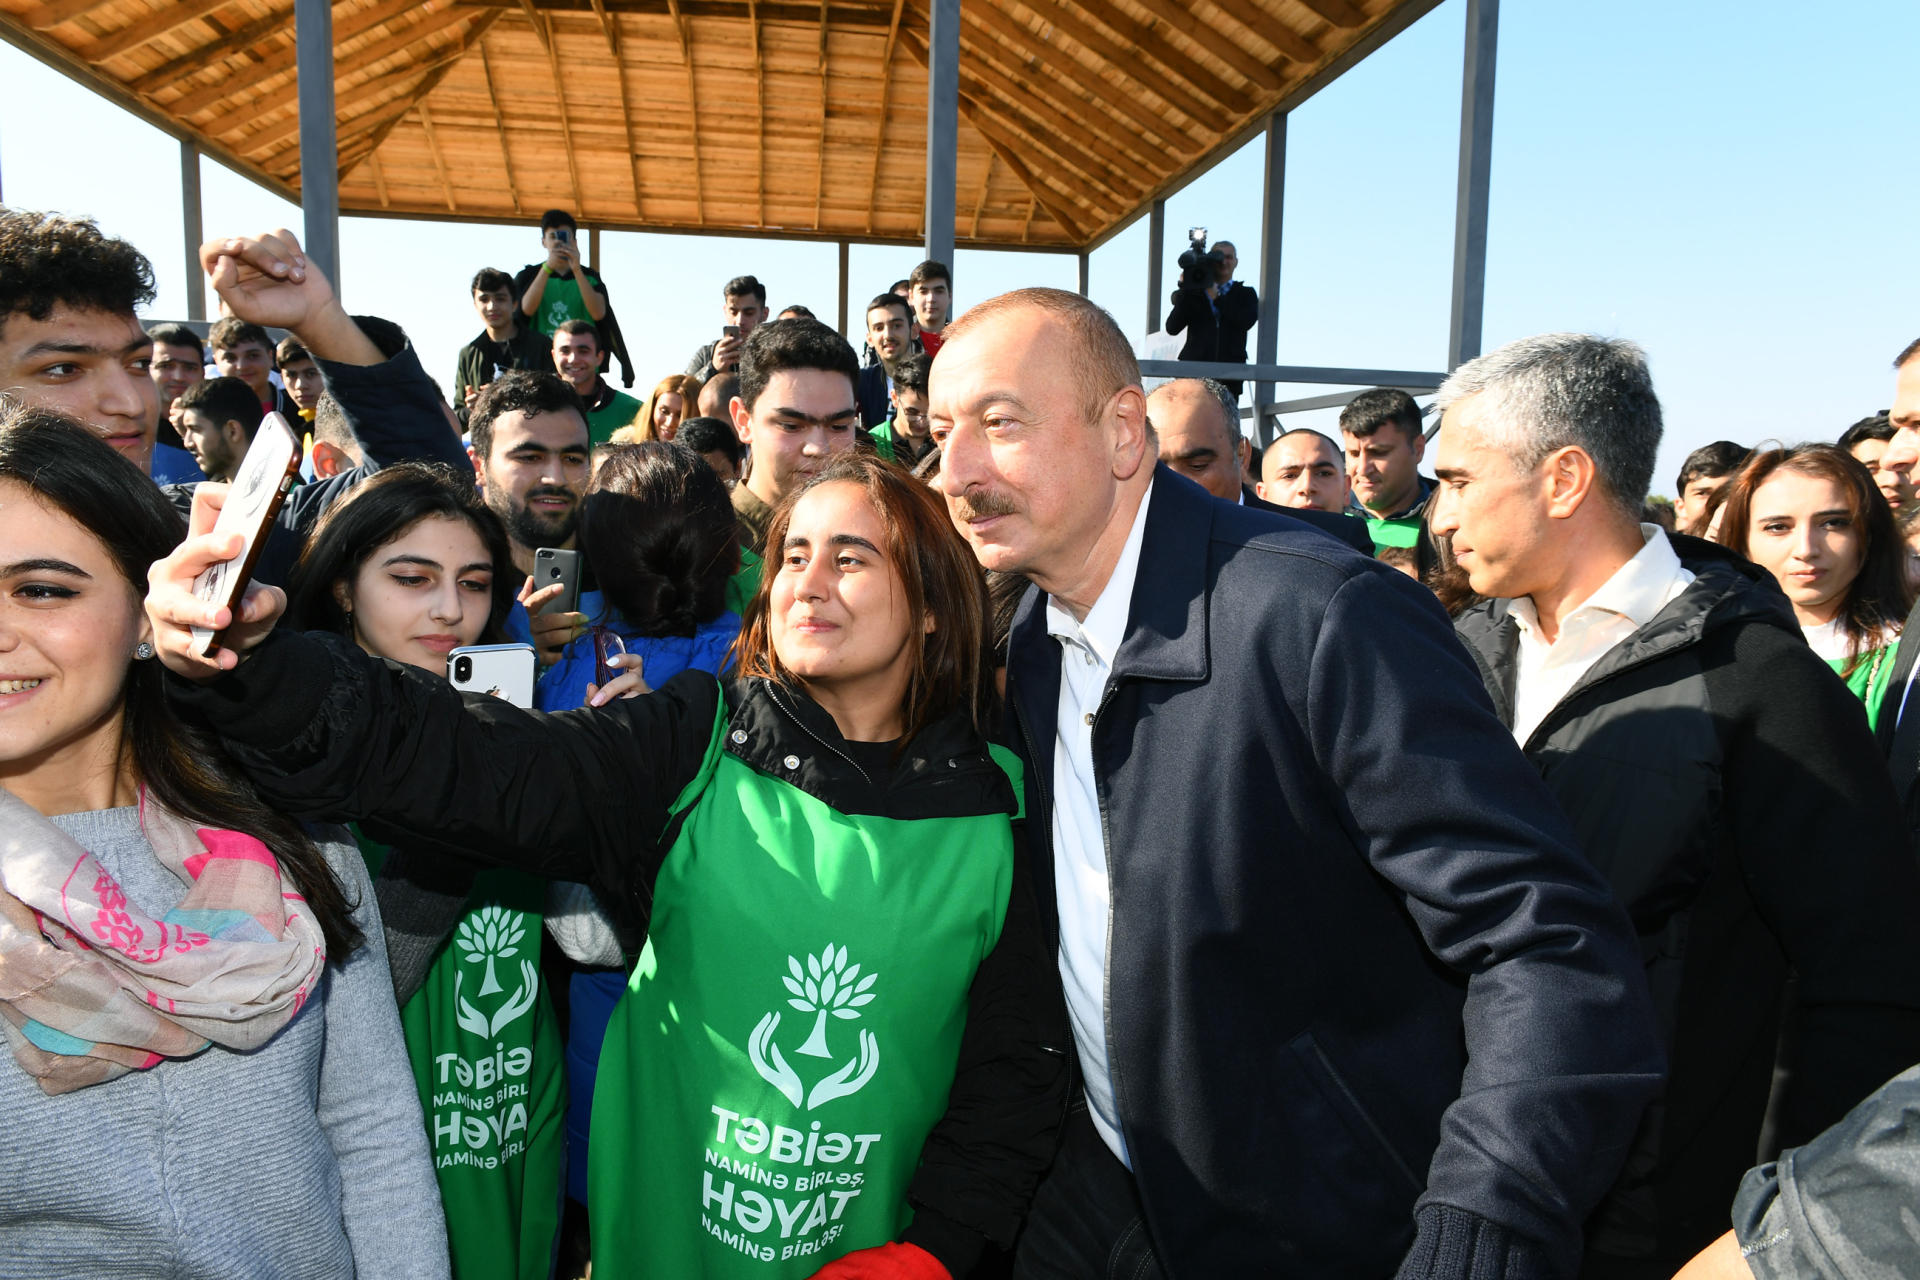 Azerbaijani president, first lady attend tree-planting campaign in Khatai district, Baku (PHOTO)